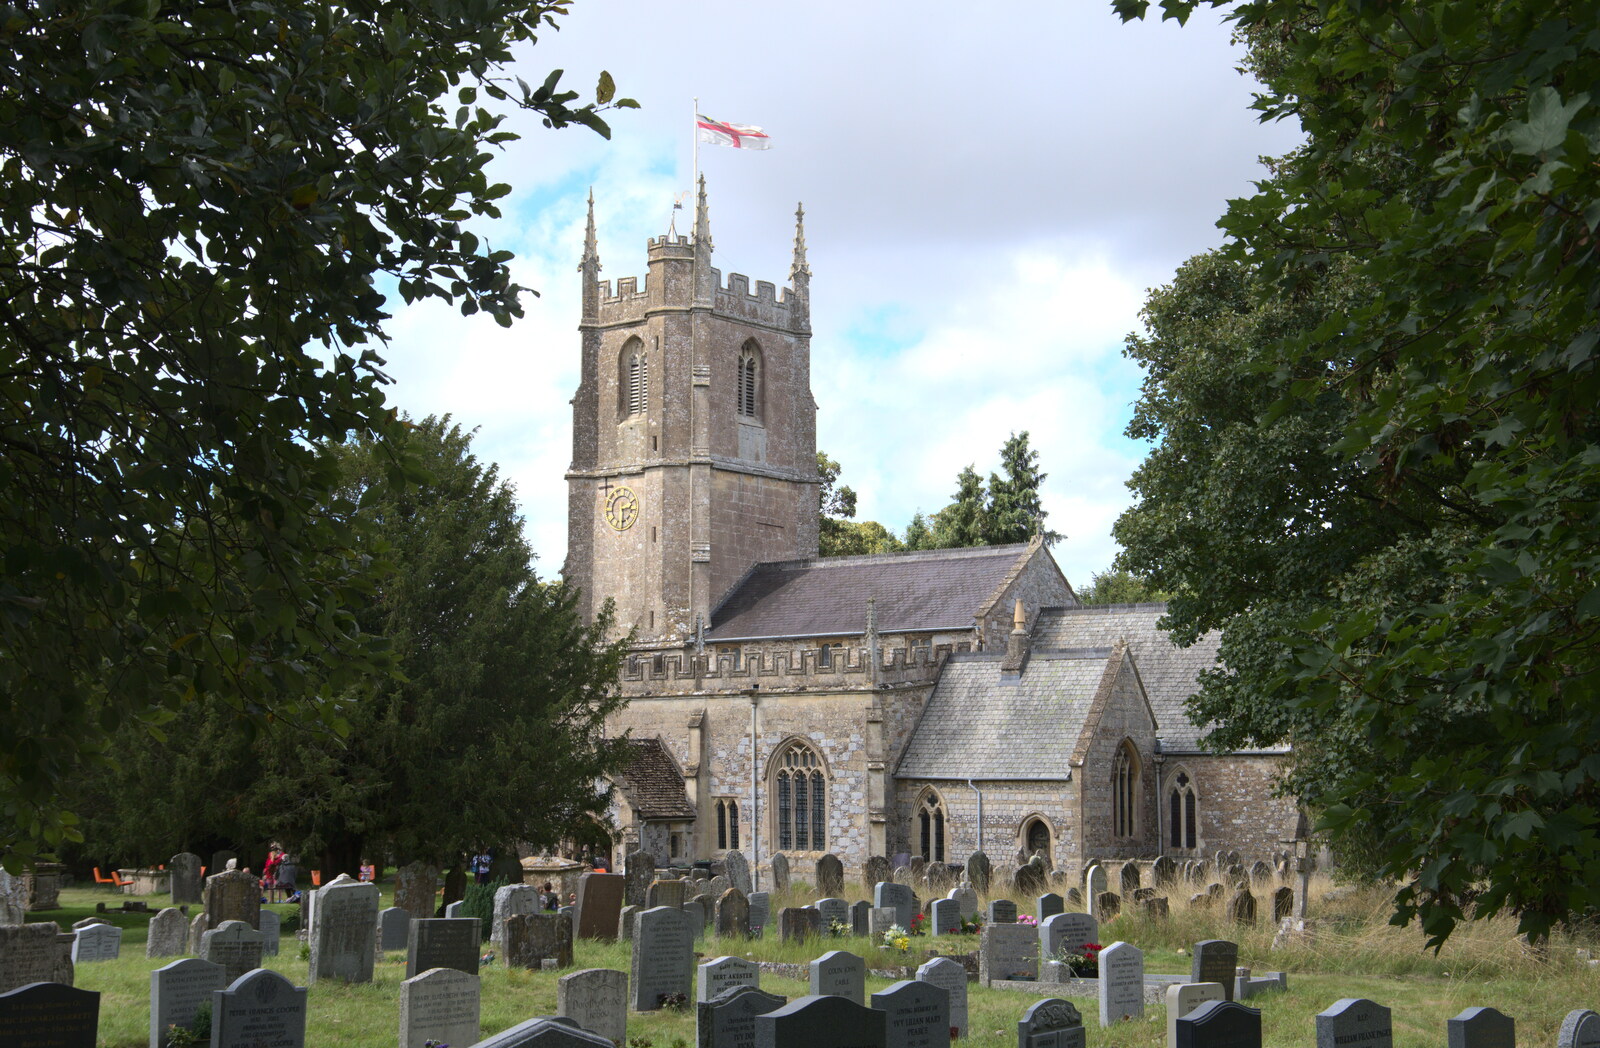 St. James' Church, Avebury from Stone Circles: Stonehenge and Avebury, Wiltshire - 22nd August 2020